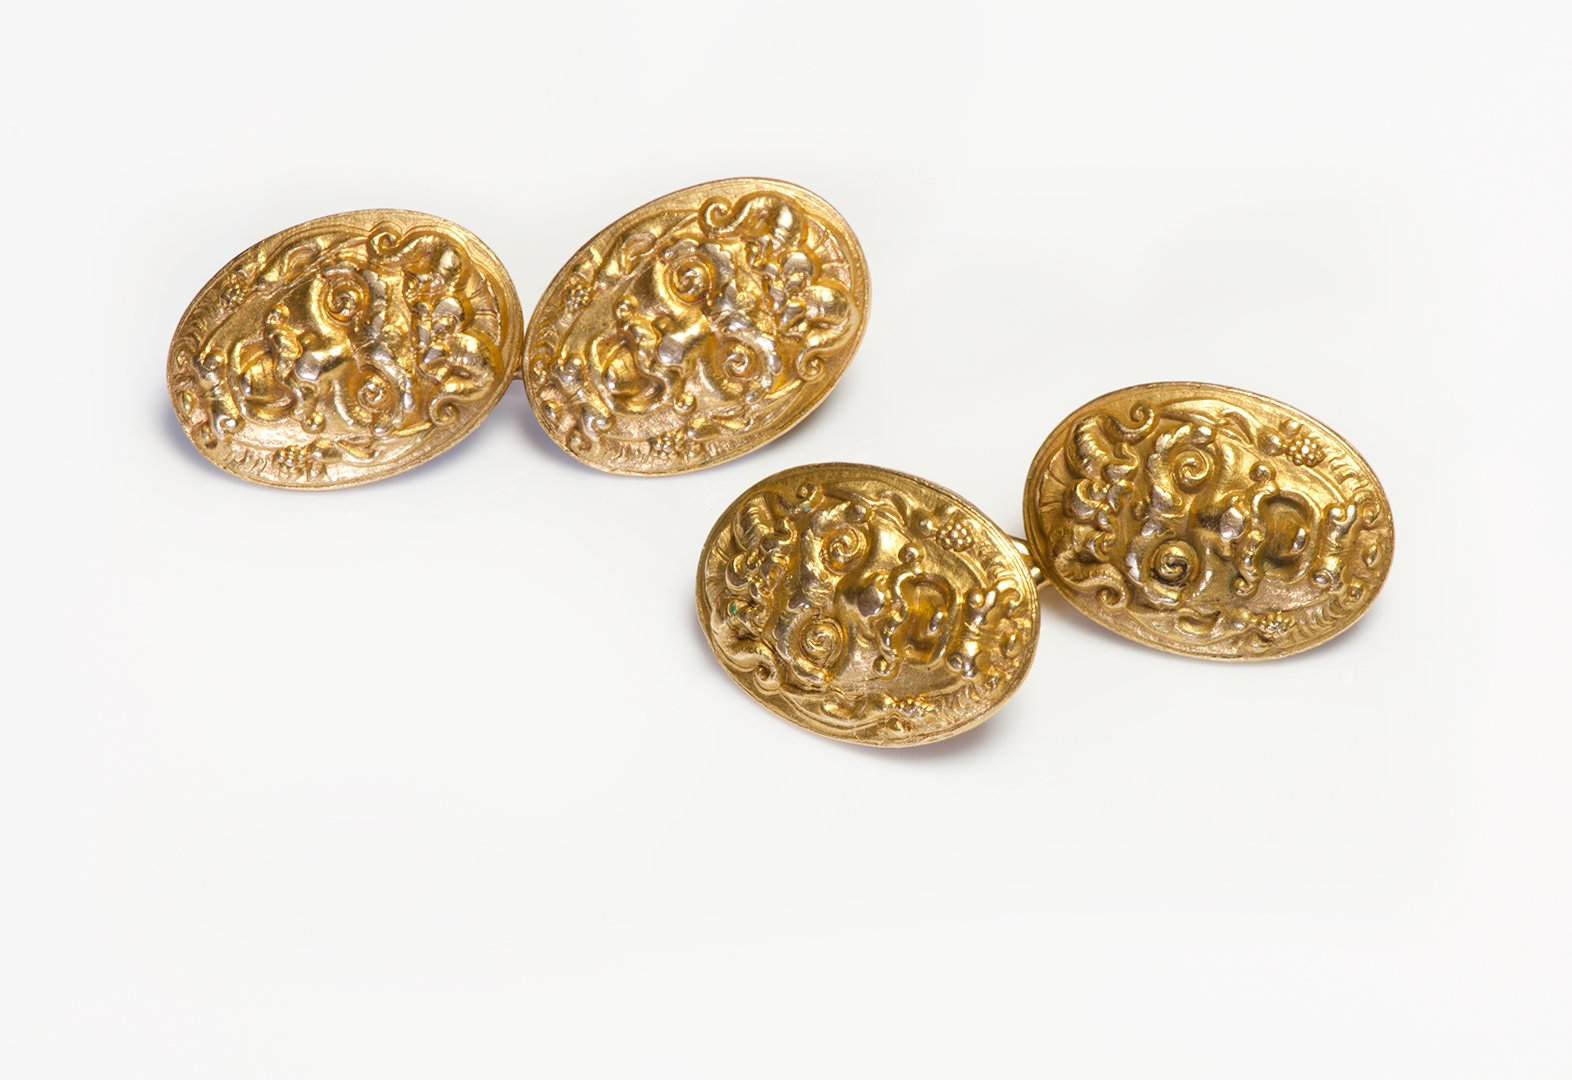 Tiffany & Co. Art Nouveau Gold Mythological Cufflinks